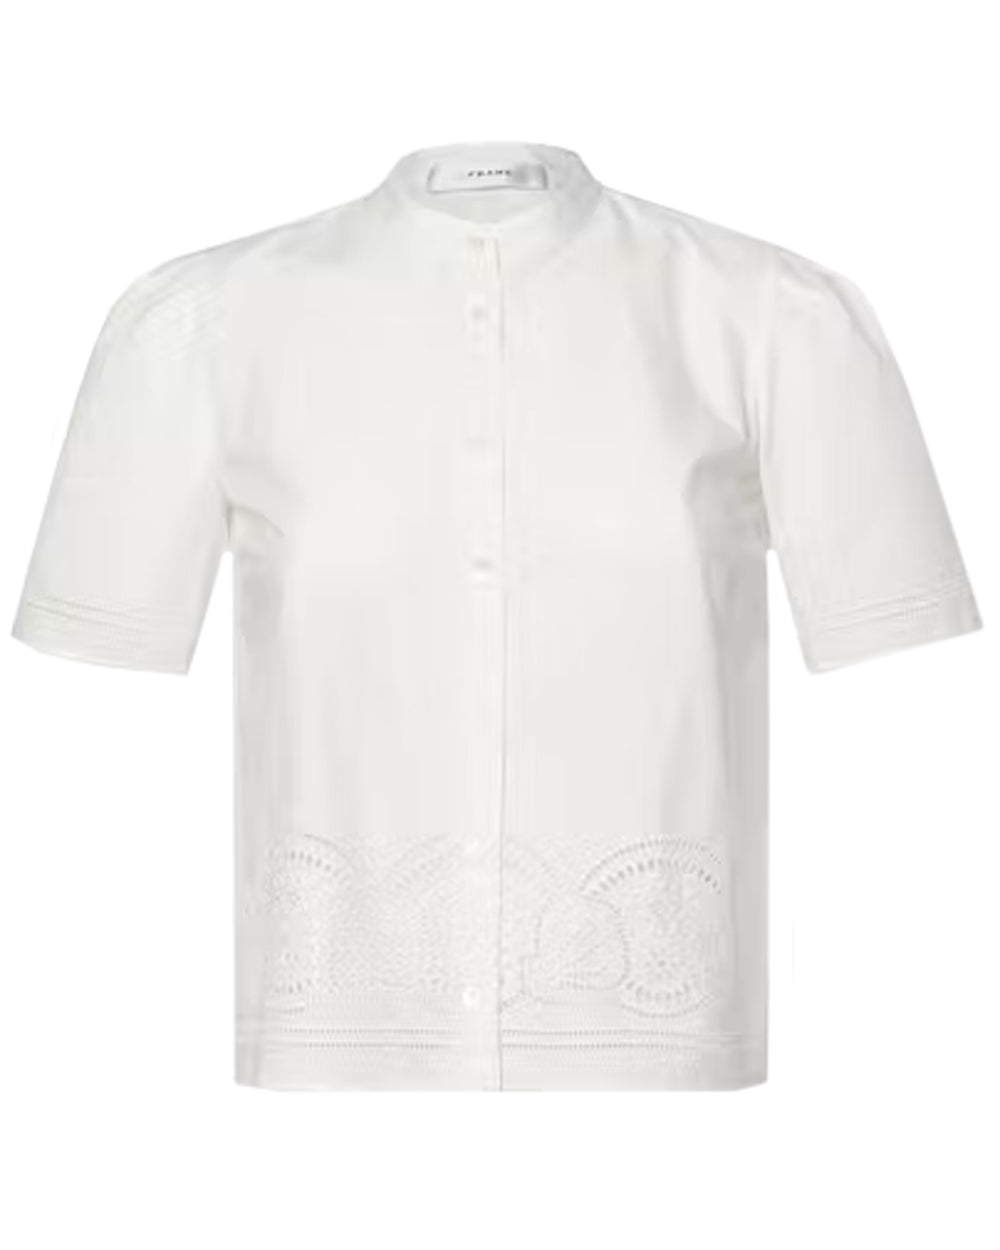 White Embroidered Short Sleeve Shirt